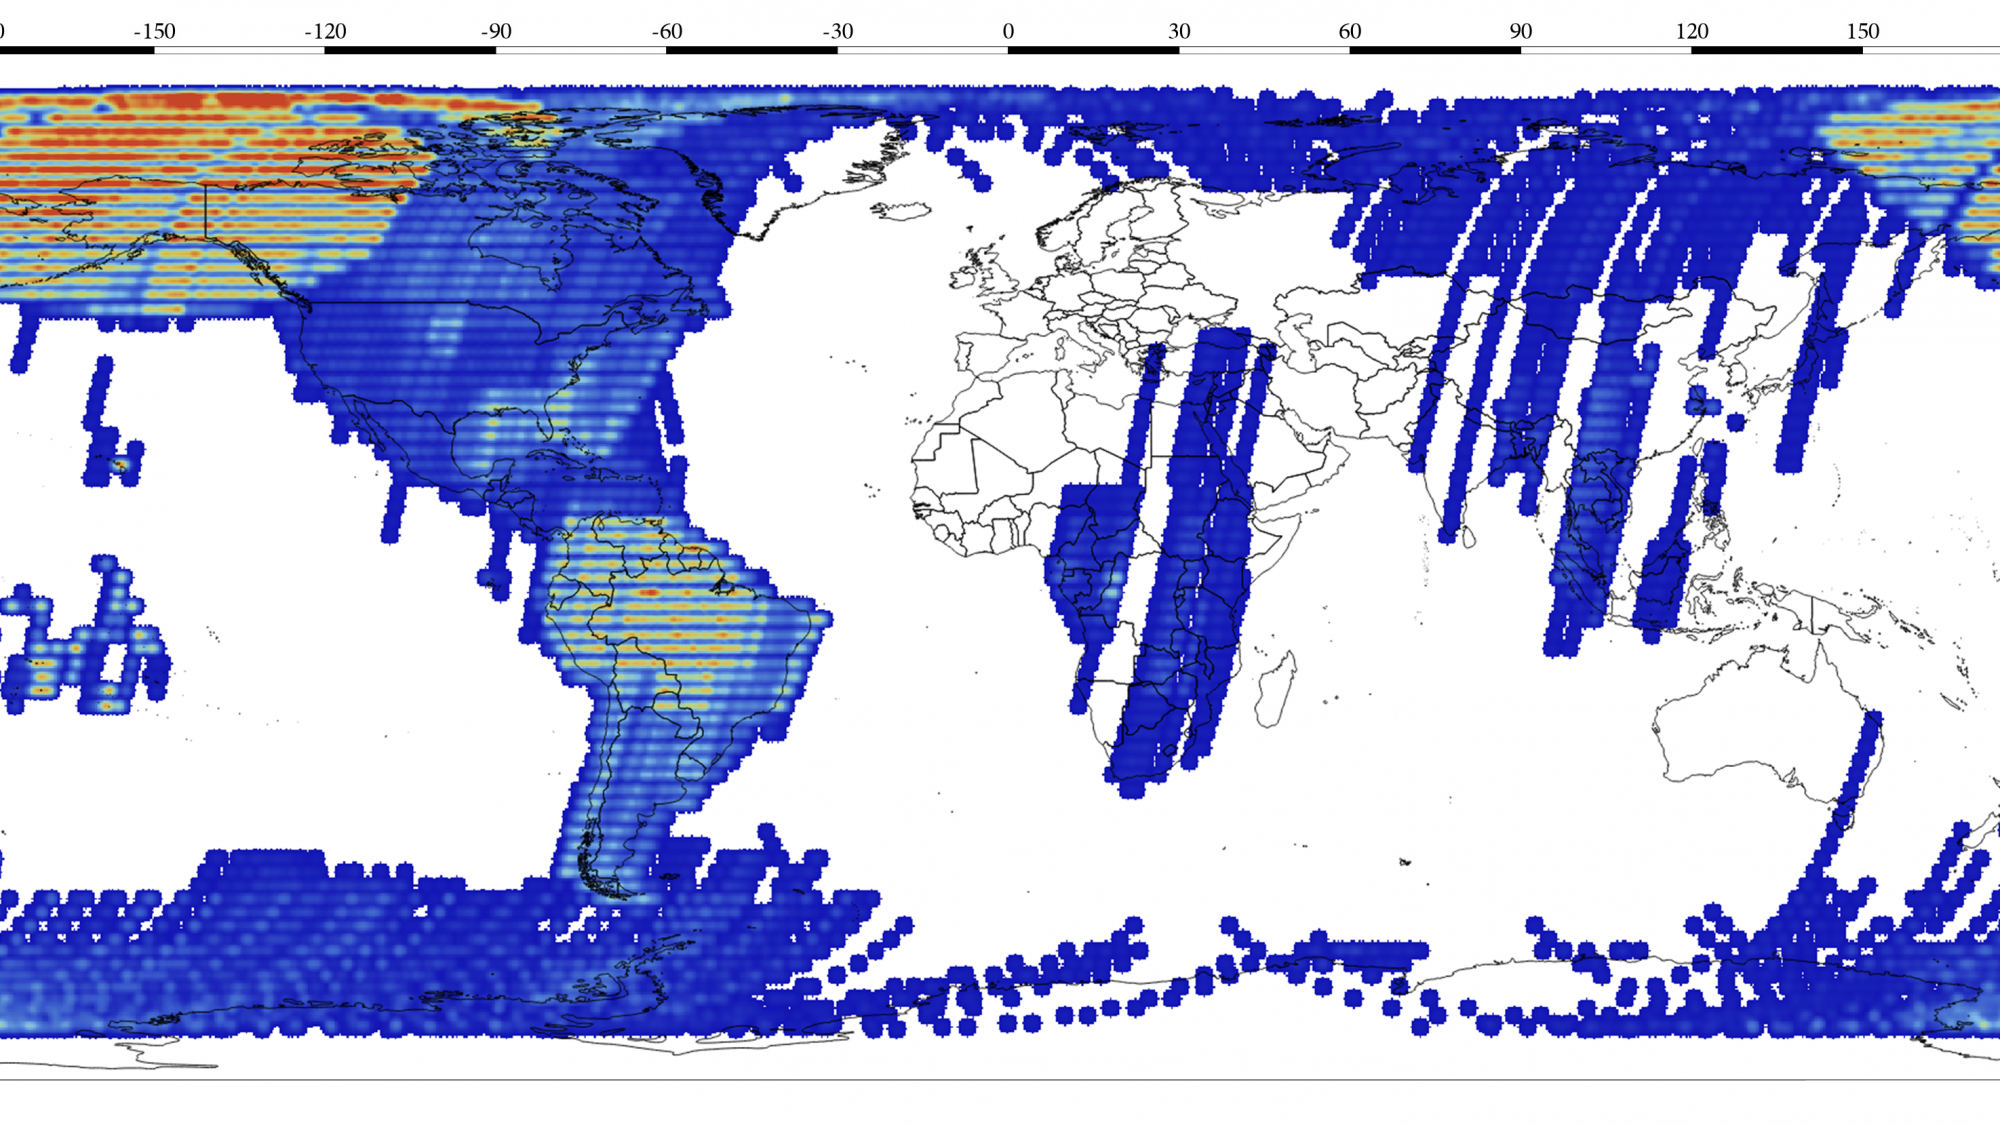 ALOS PALSAR Global Radar Imagery, 2006-2011